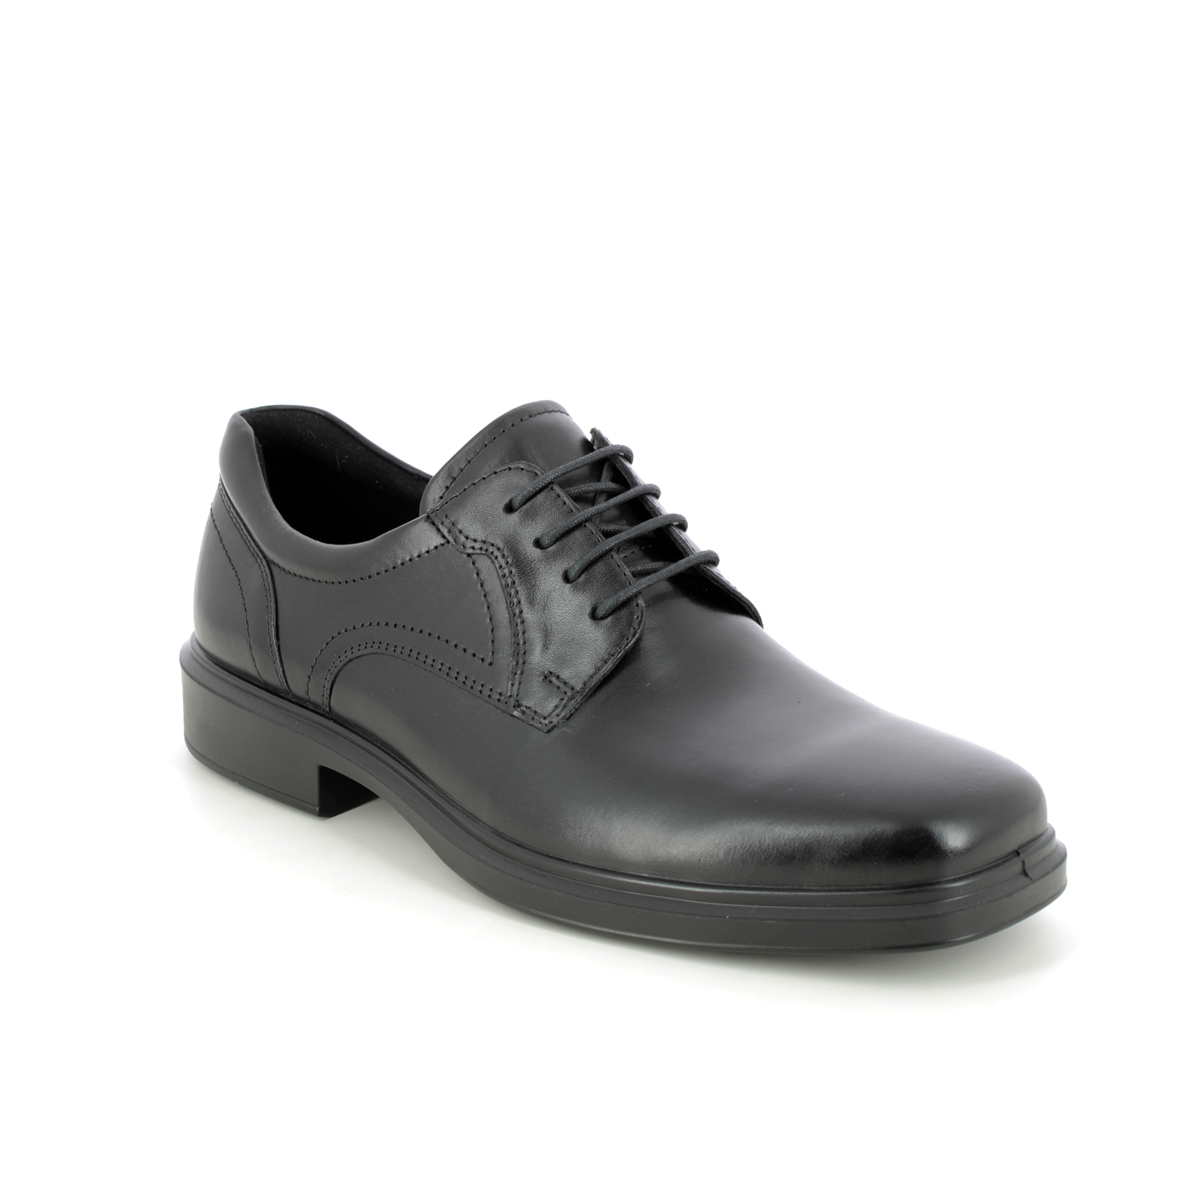 Ecco Helsinki 2 Plain Black Leather Mens Formal Shoes 500164-01001 In Size 40 In Plain Black Leather